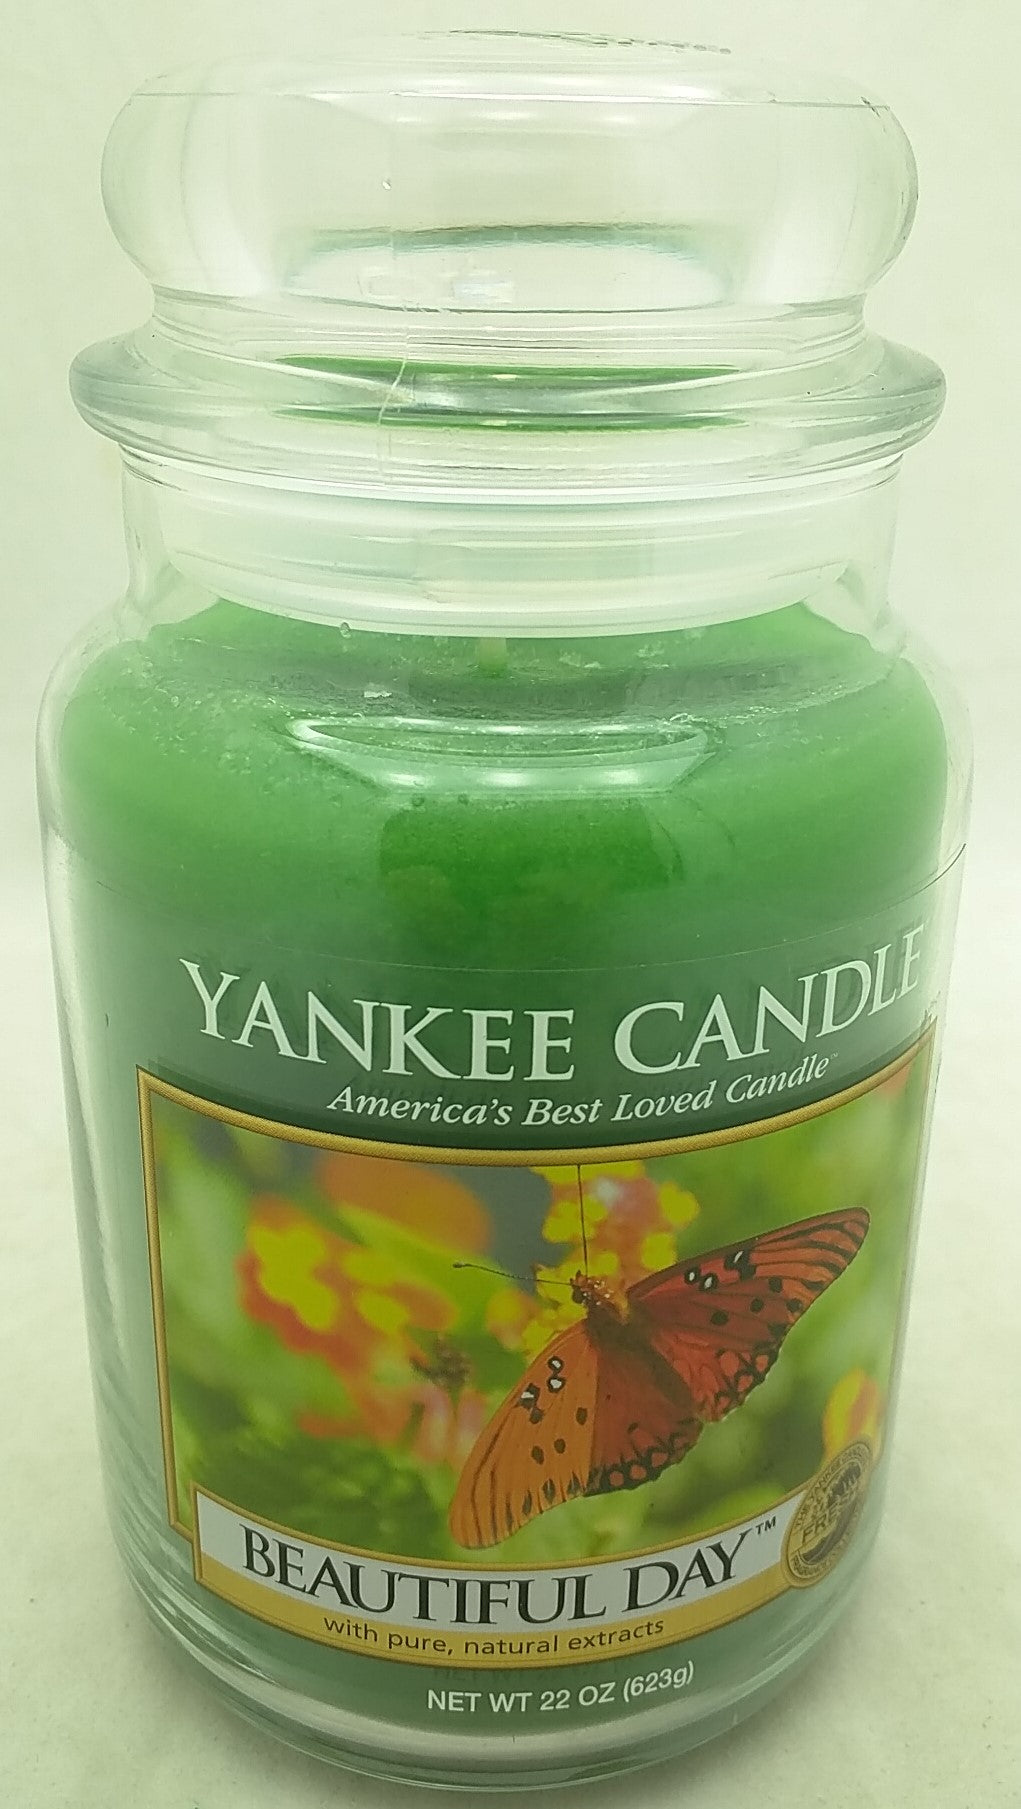 Beautiful Day 22 Oz Jar Yankee Candle Festive Unused Green